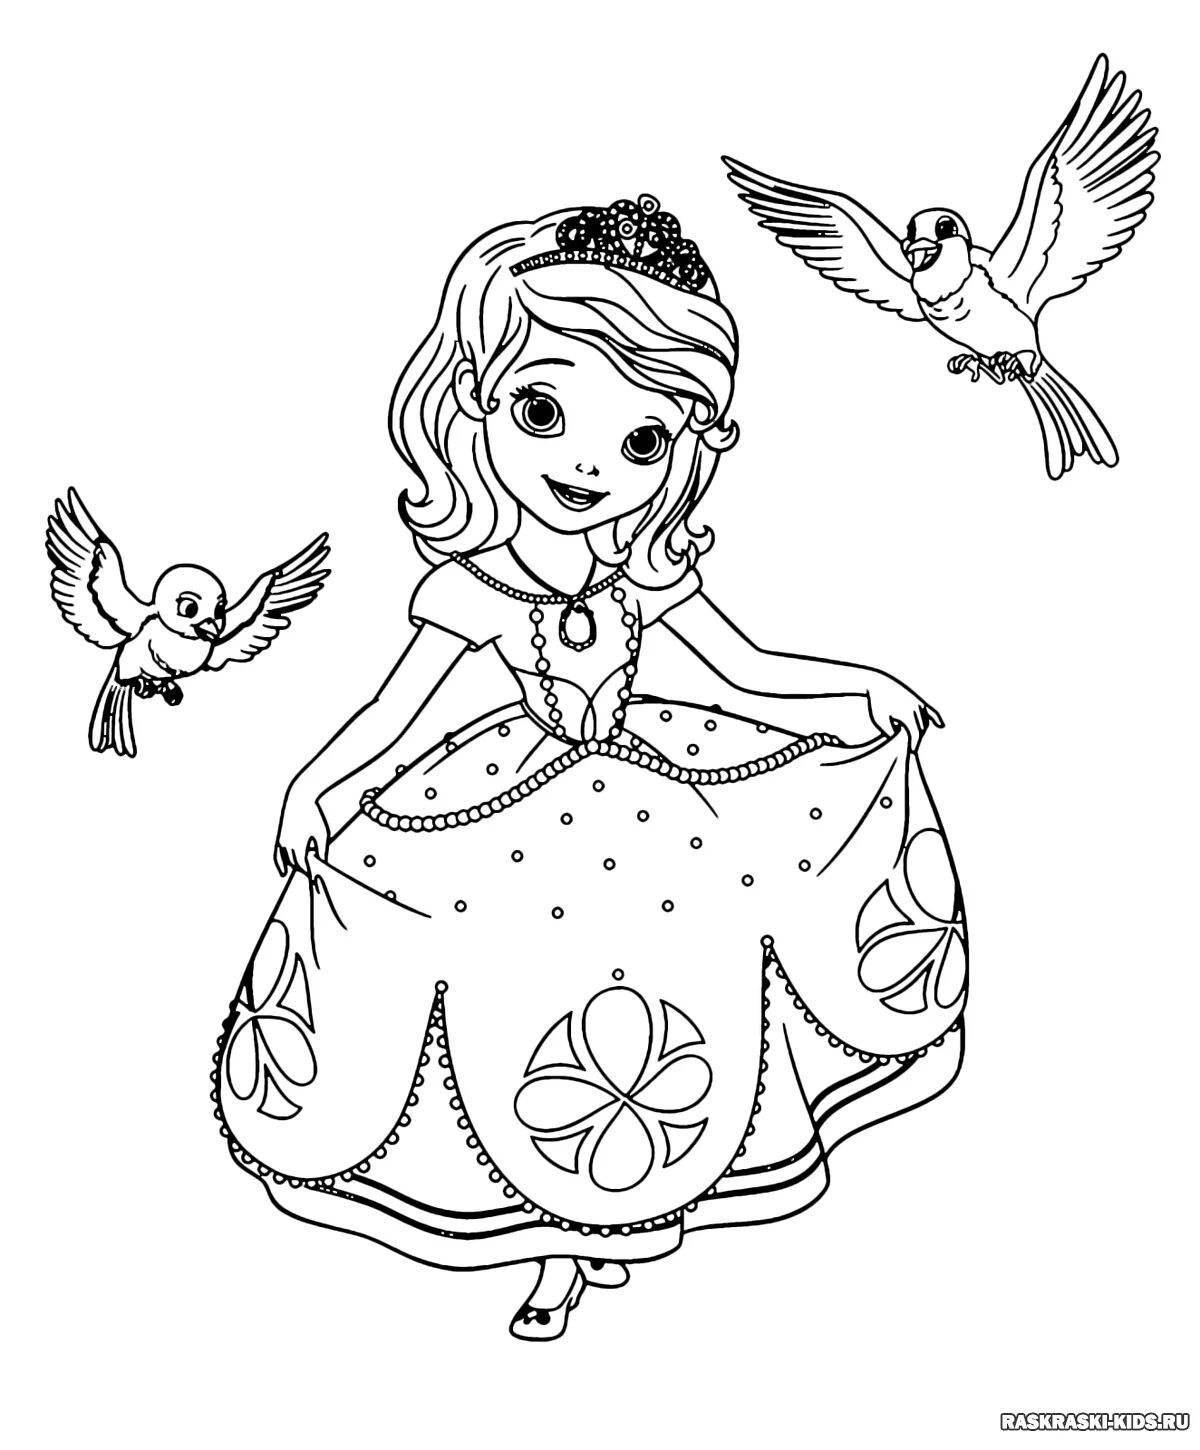 Fancy princess coloring page